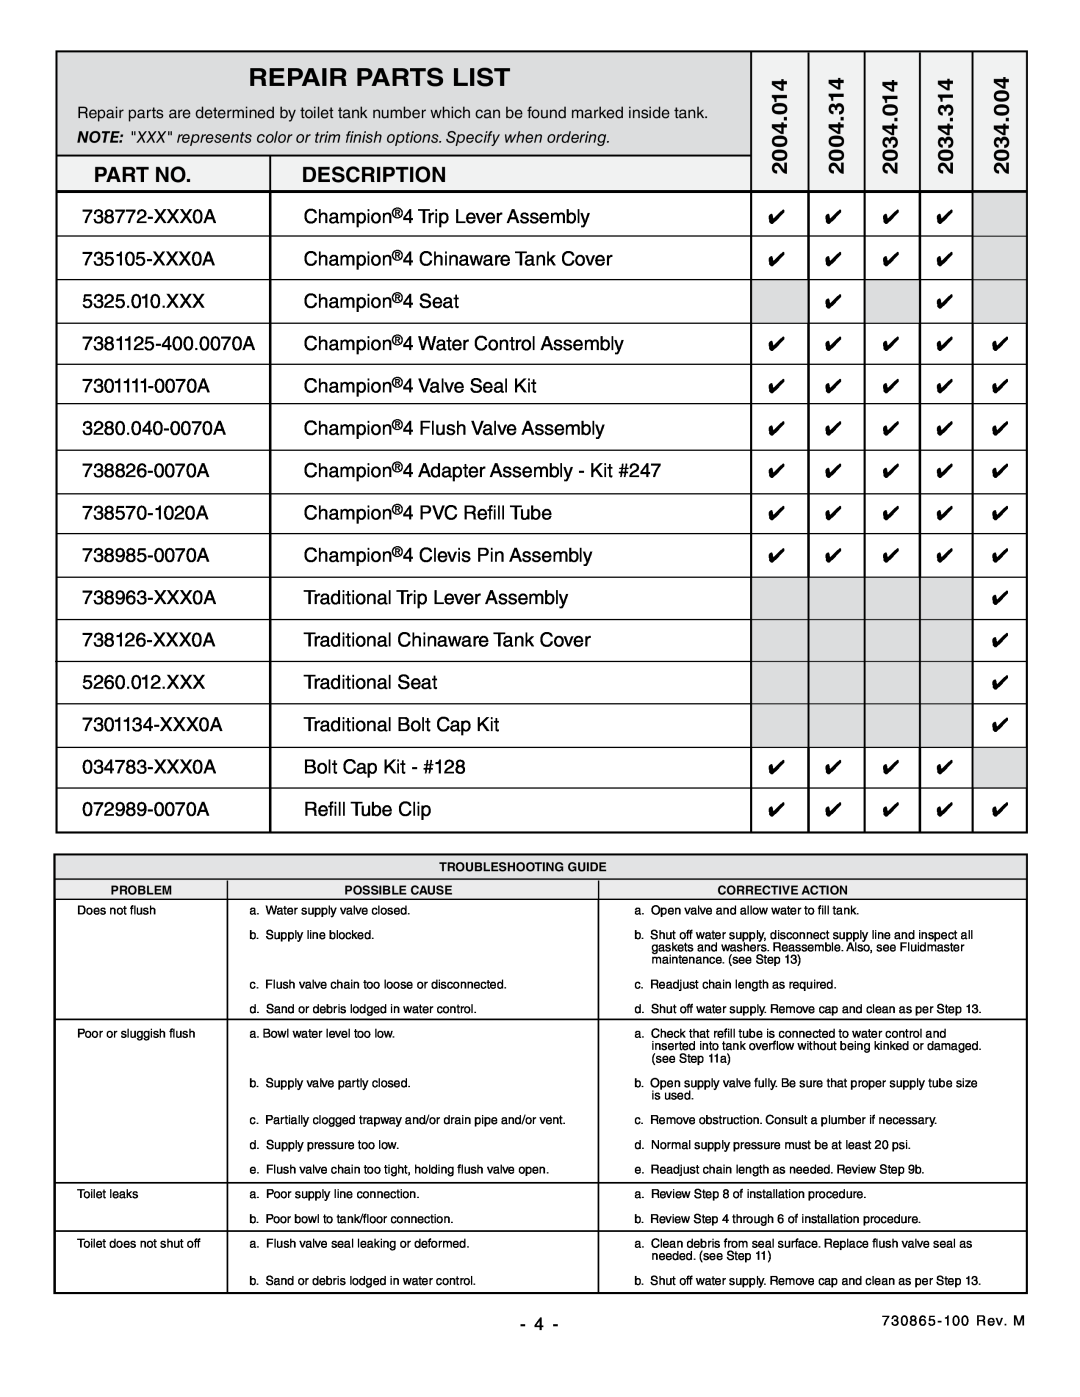 American Standard Description, Repair Parts List, 2004.014, 2004.314, 2034.014, 2034.314, 2034.004 